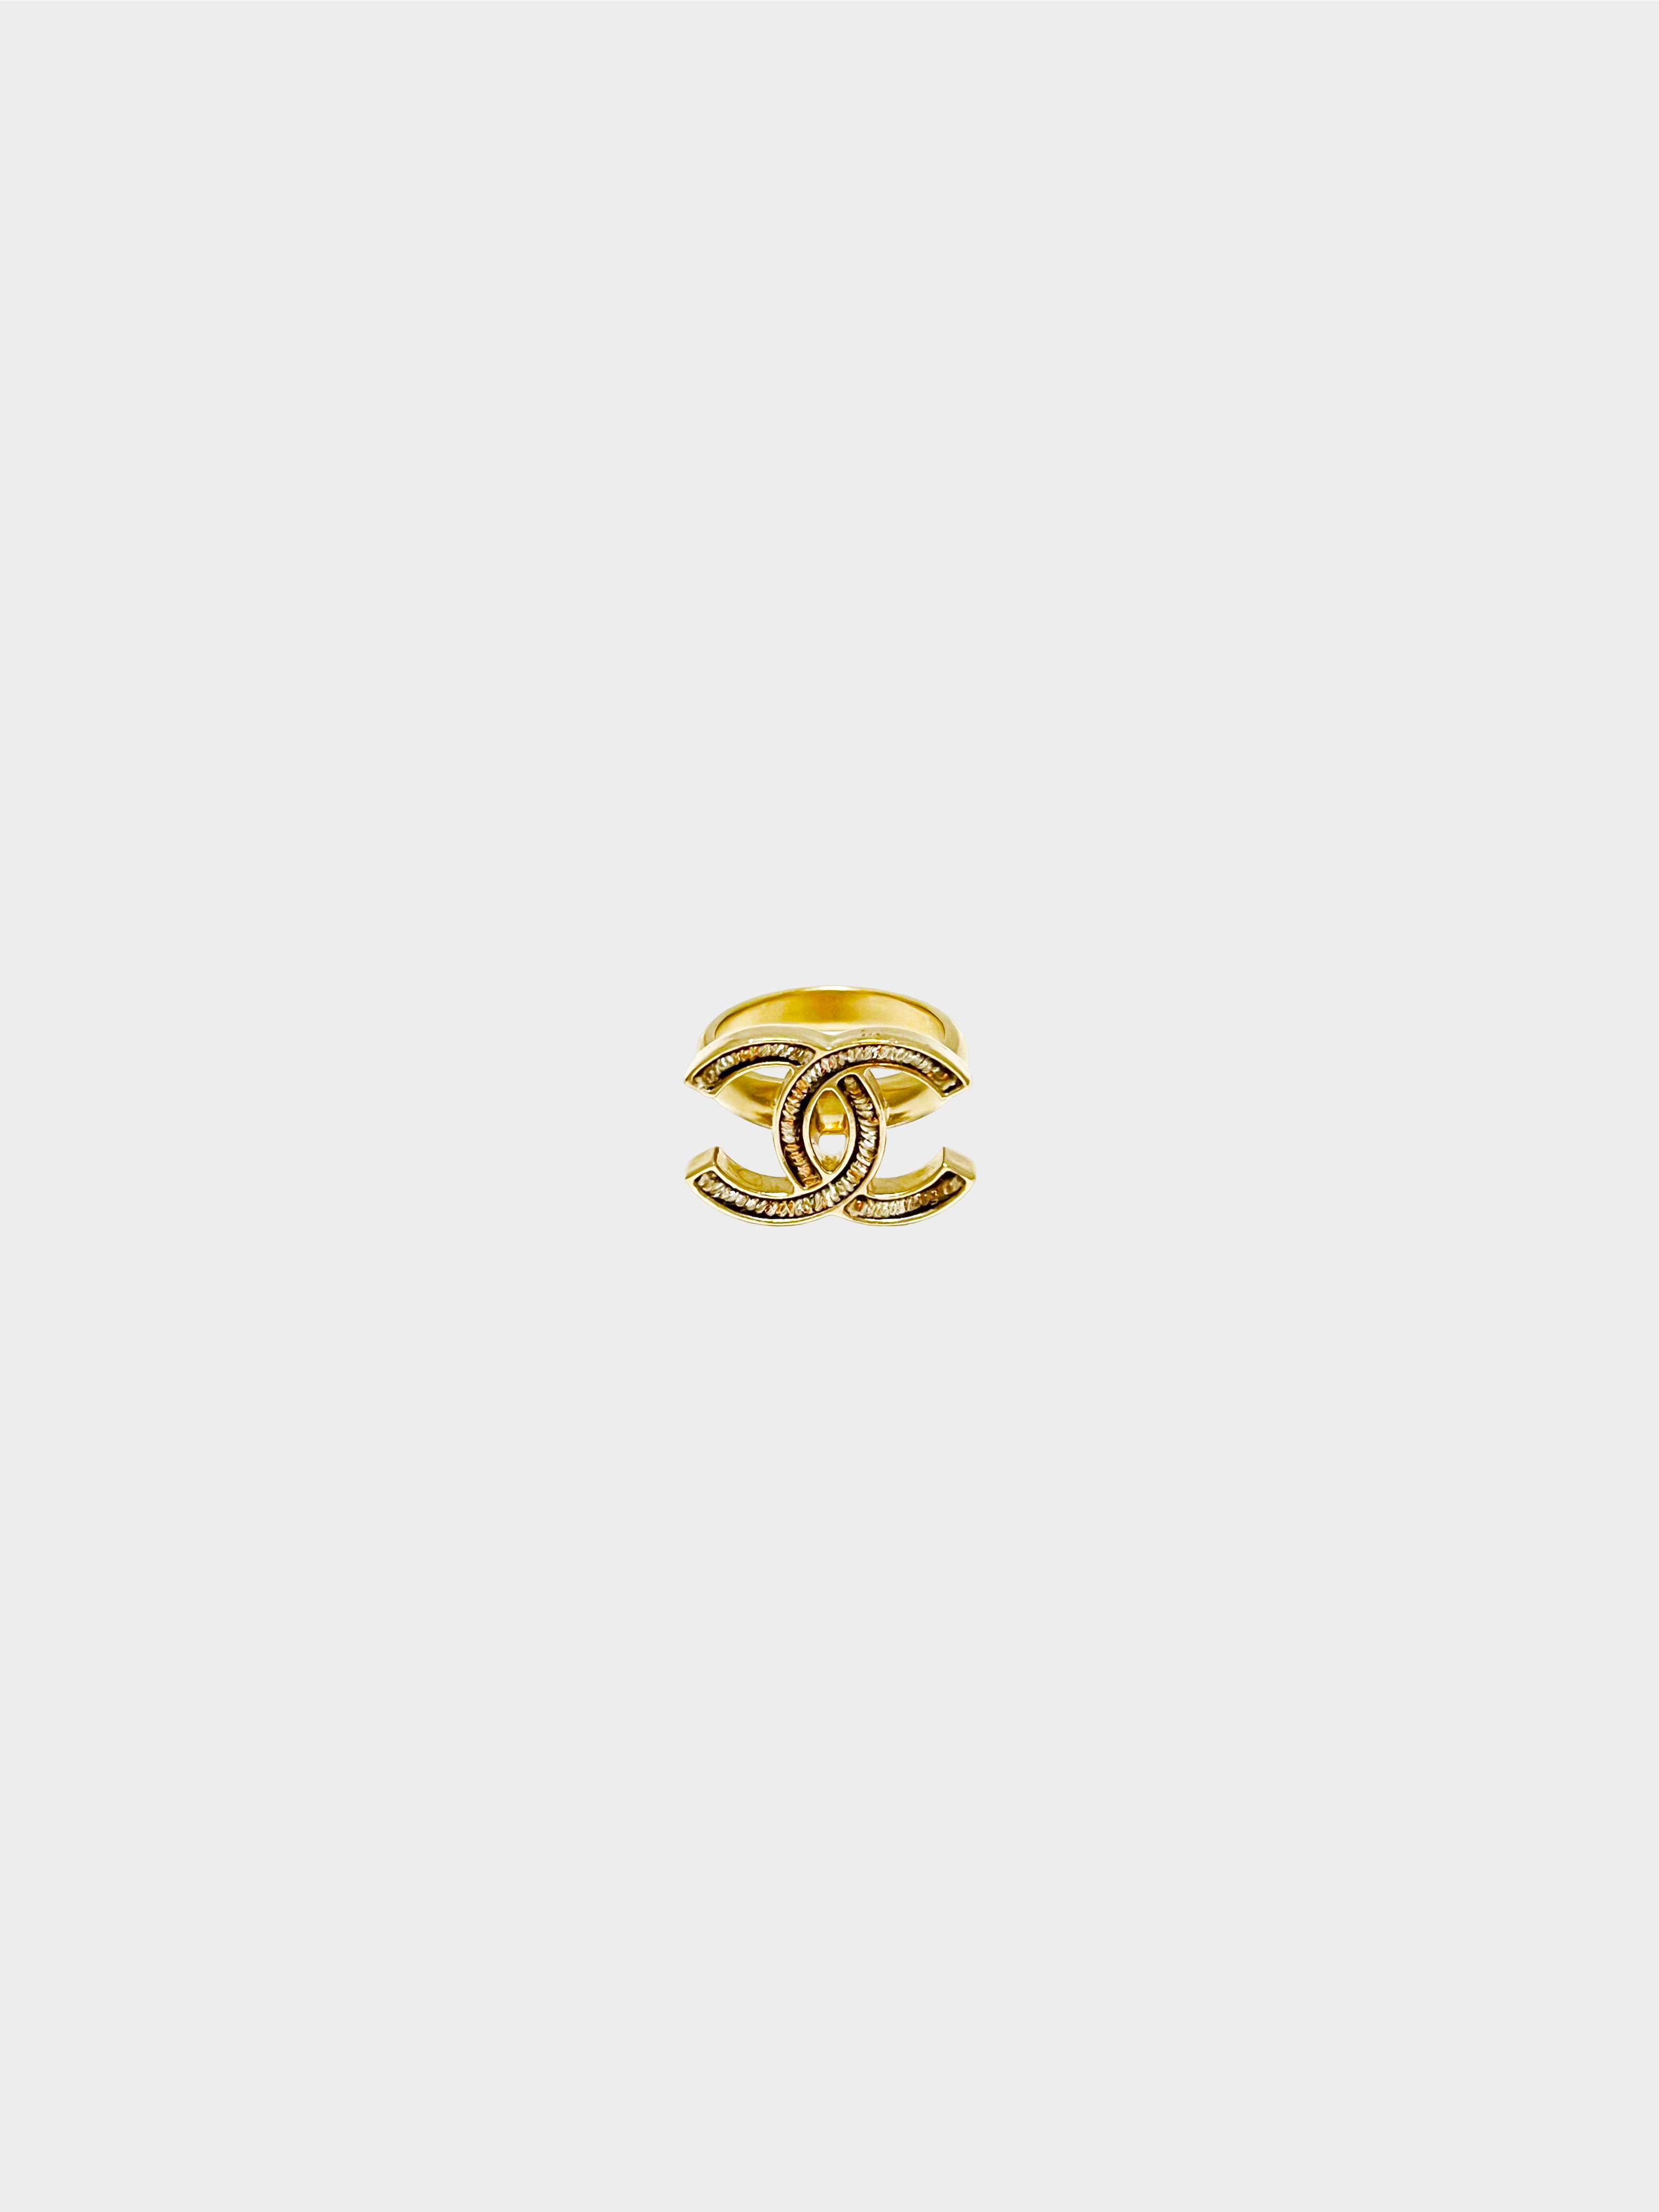 Chanel Vintage Gold CC Logo Ring - Size 6.5